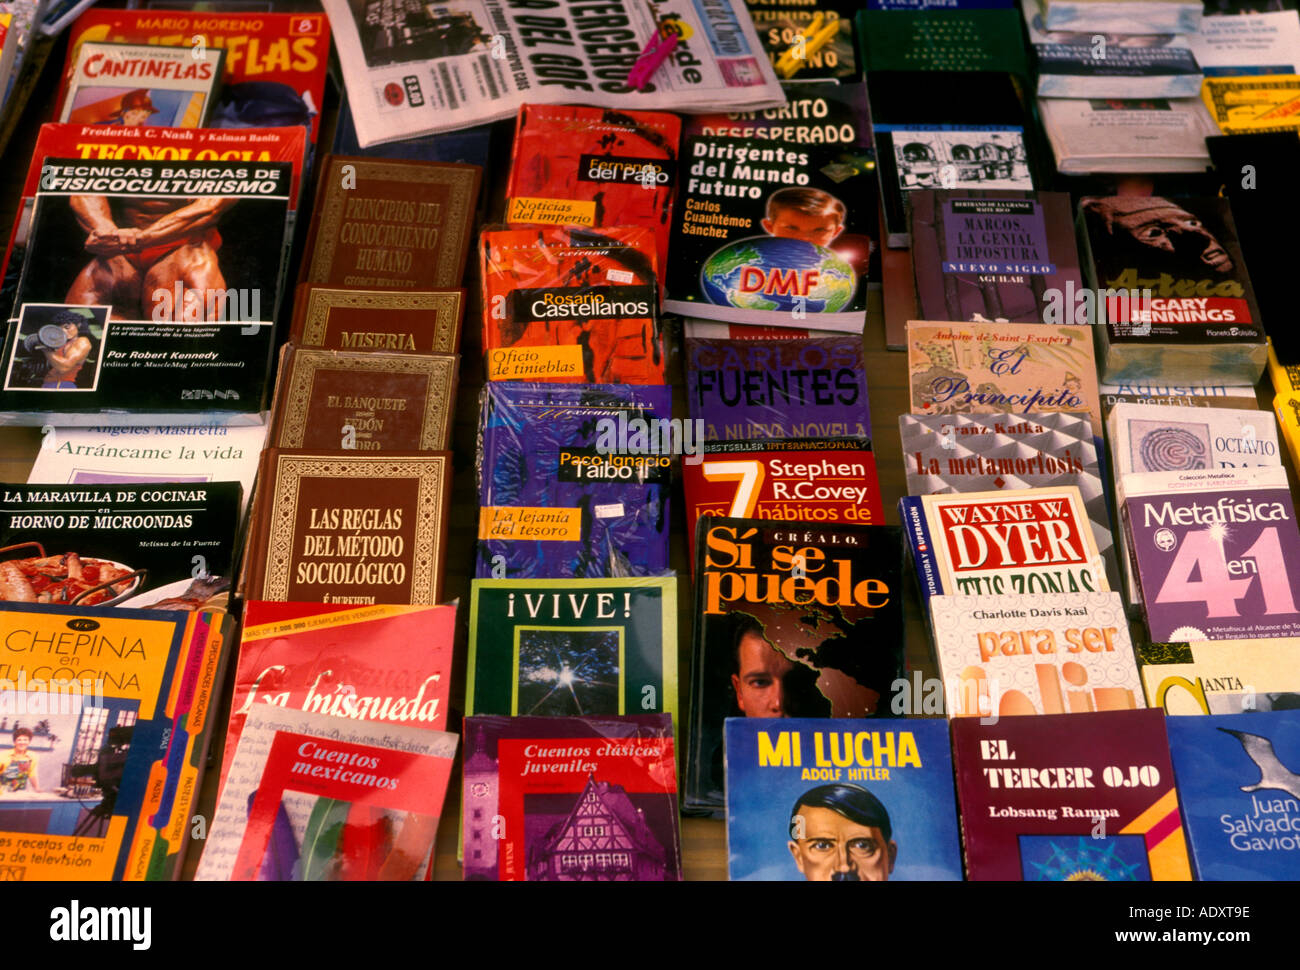 Spanische Sprache Bücher, Buch, Buchhändler, bücherstand, Zocalo, Mexico City, Distrito Federal, Mexiko Stockfoto